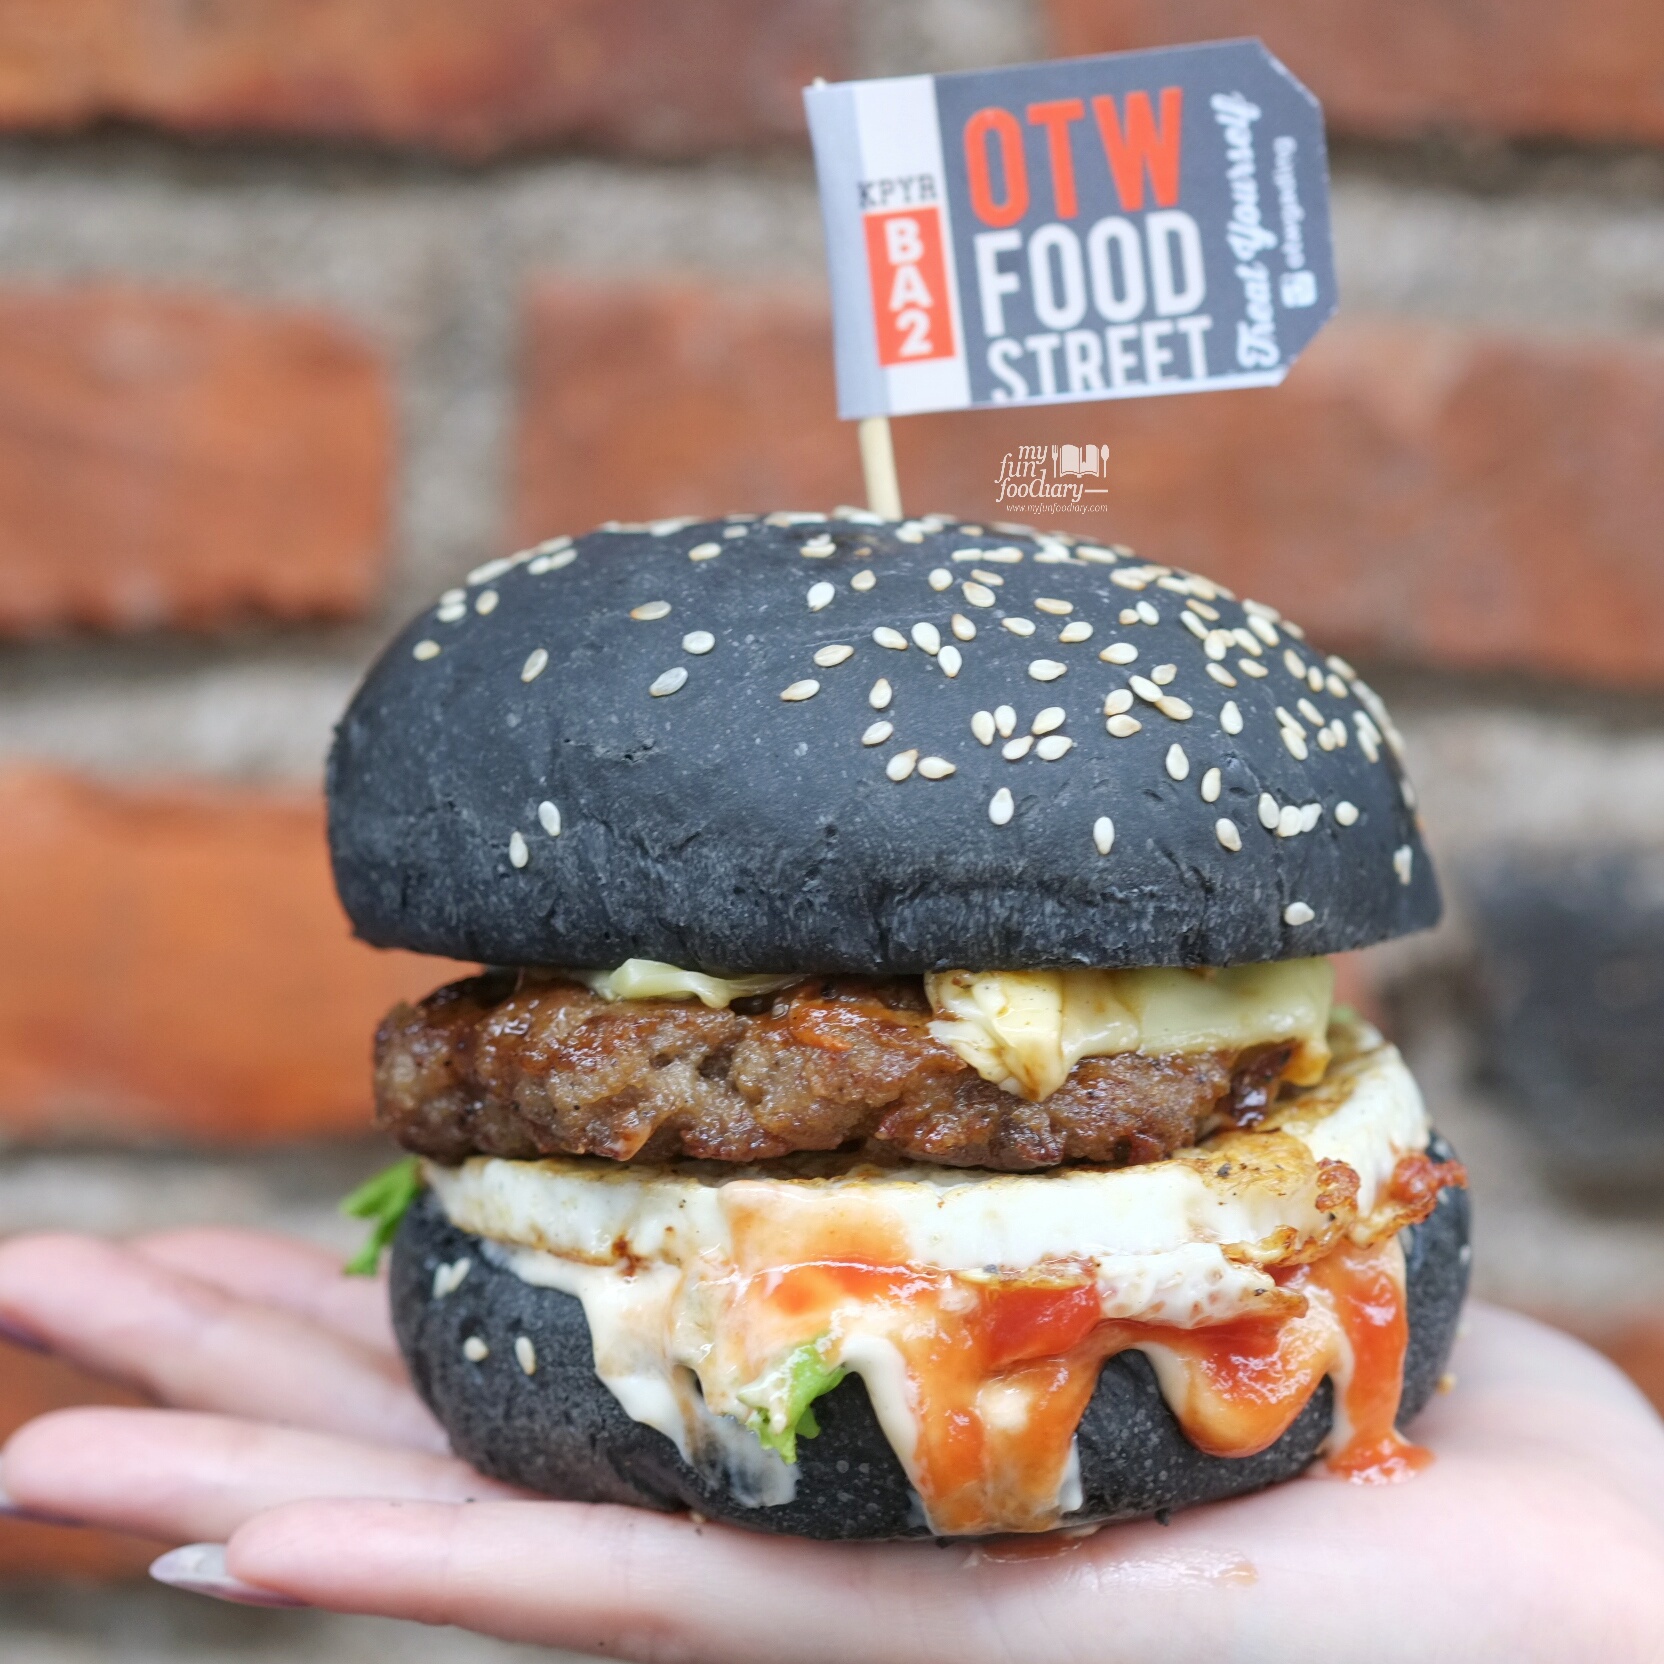 Black Burger at OTW Food Street Gading by Myfunfoodiary